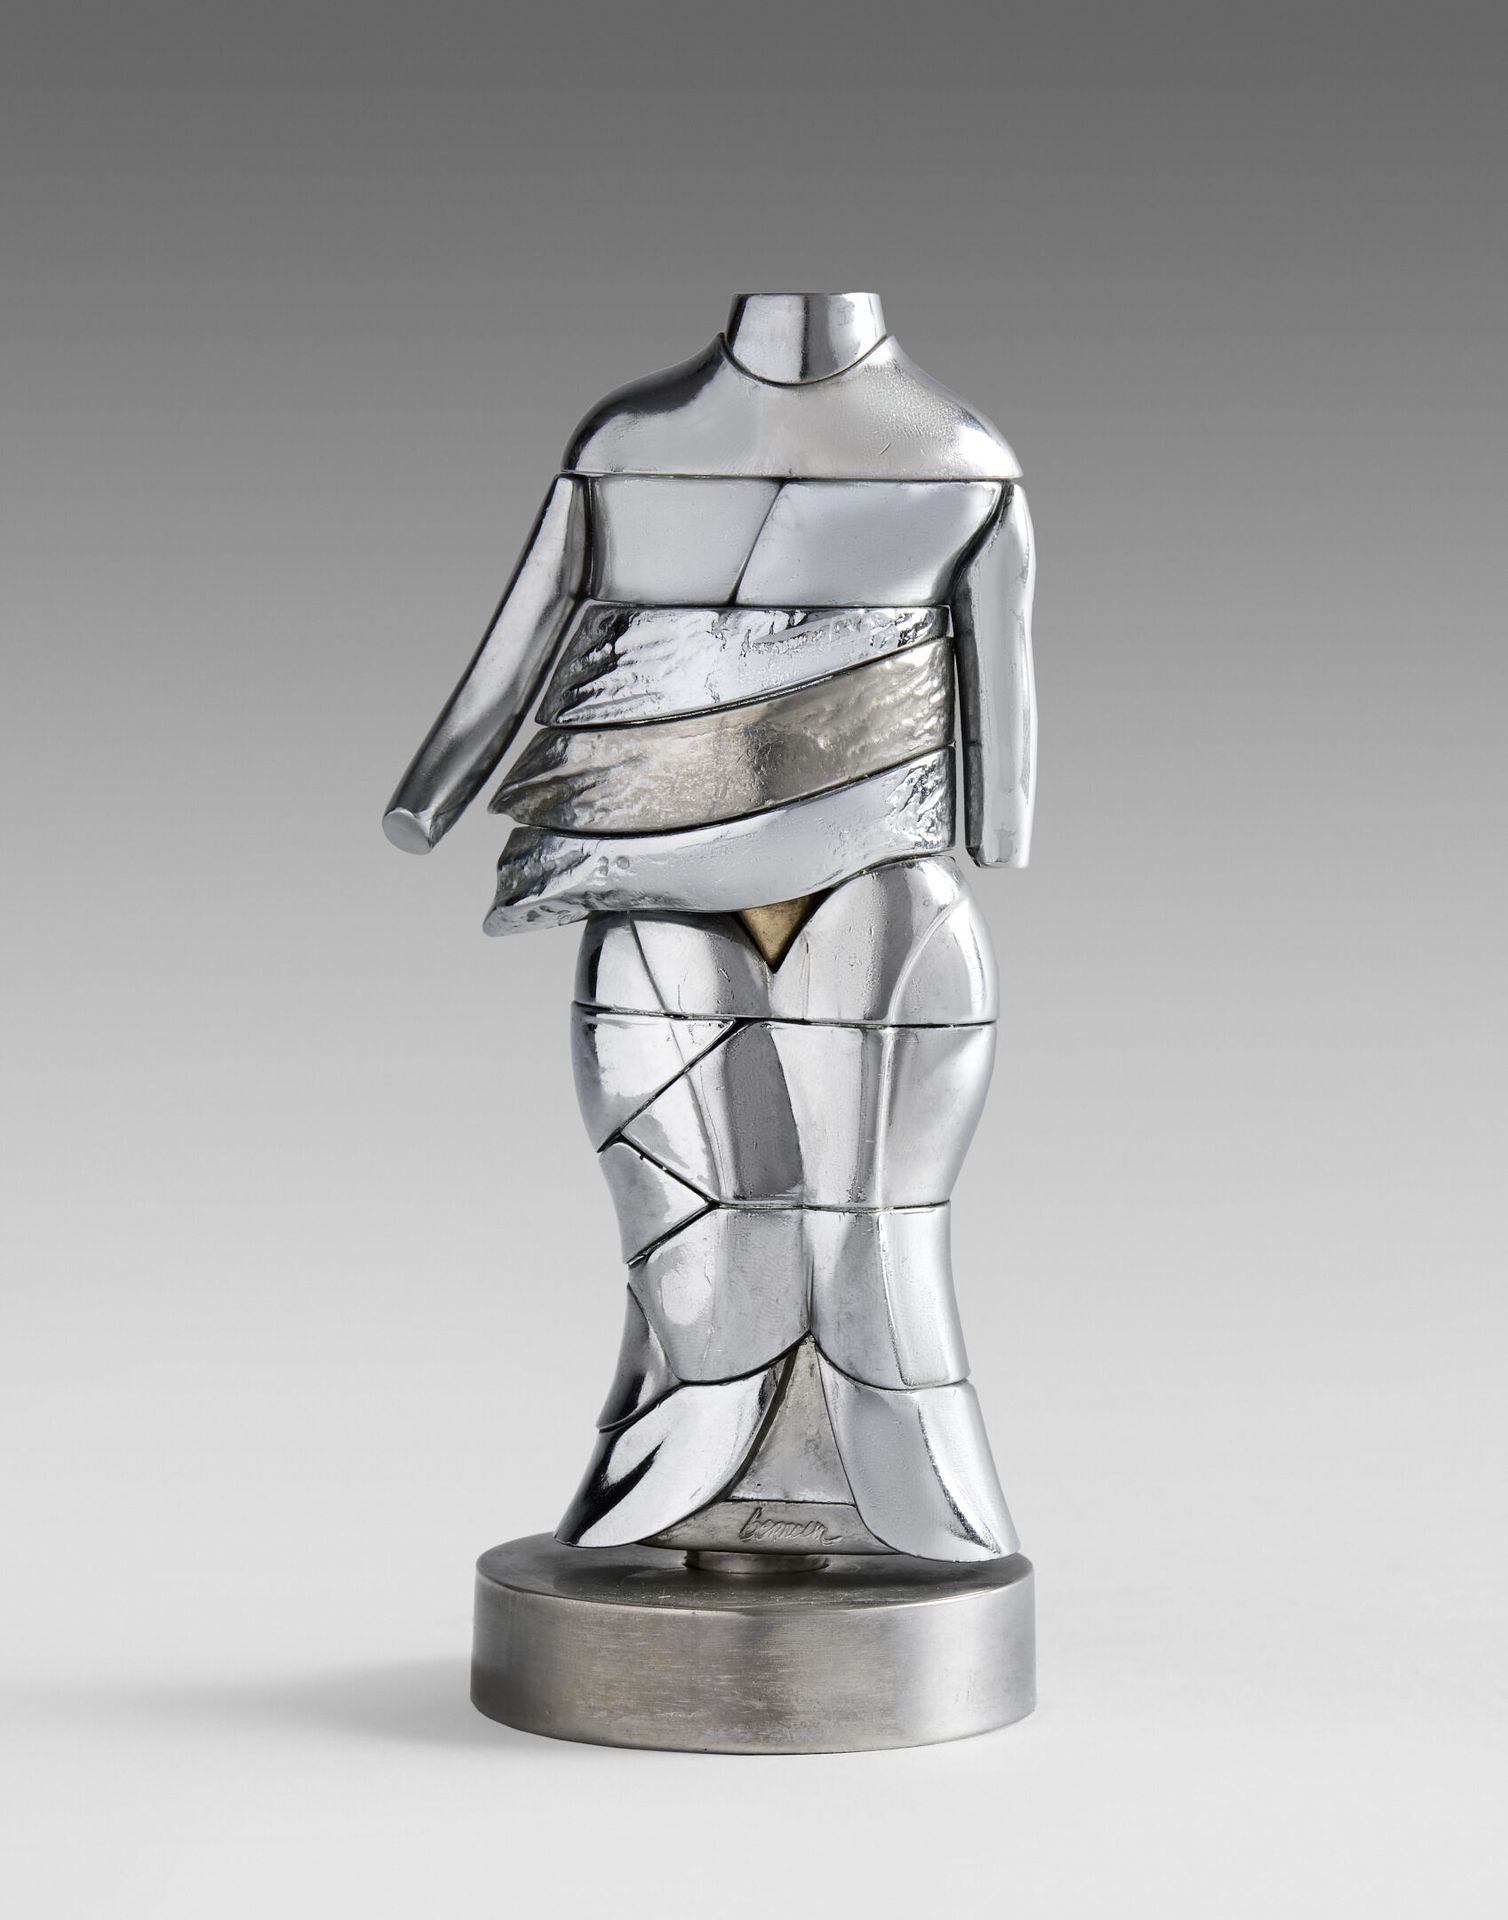 Null 米格尔-贝罗卡尔(1933-2006)
迷你小山羊
铬金属雕塑，签名和编号为1518。
高度：16厘米